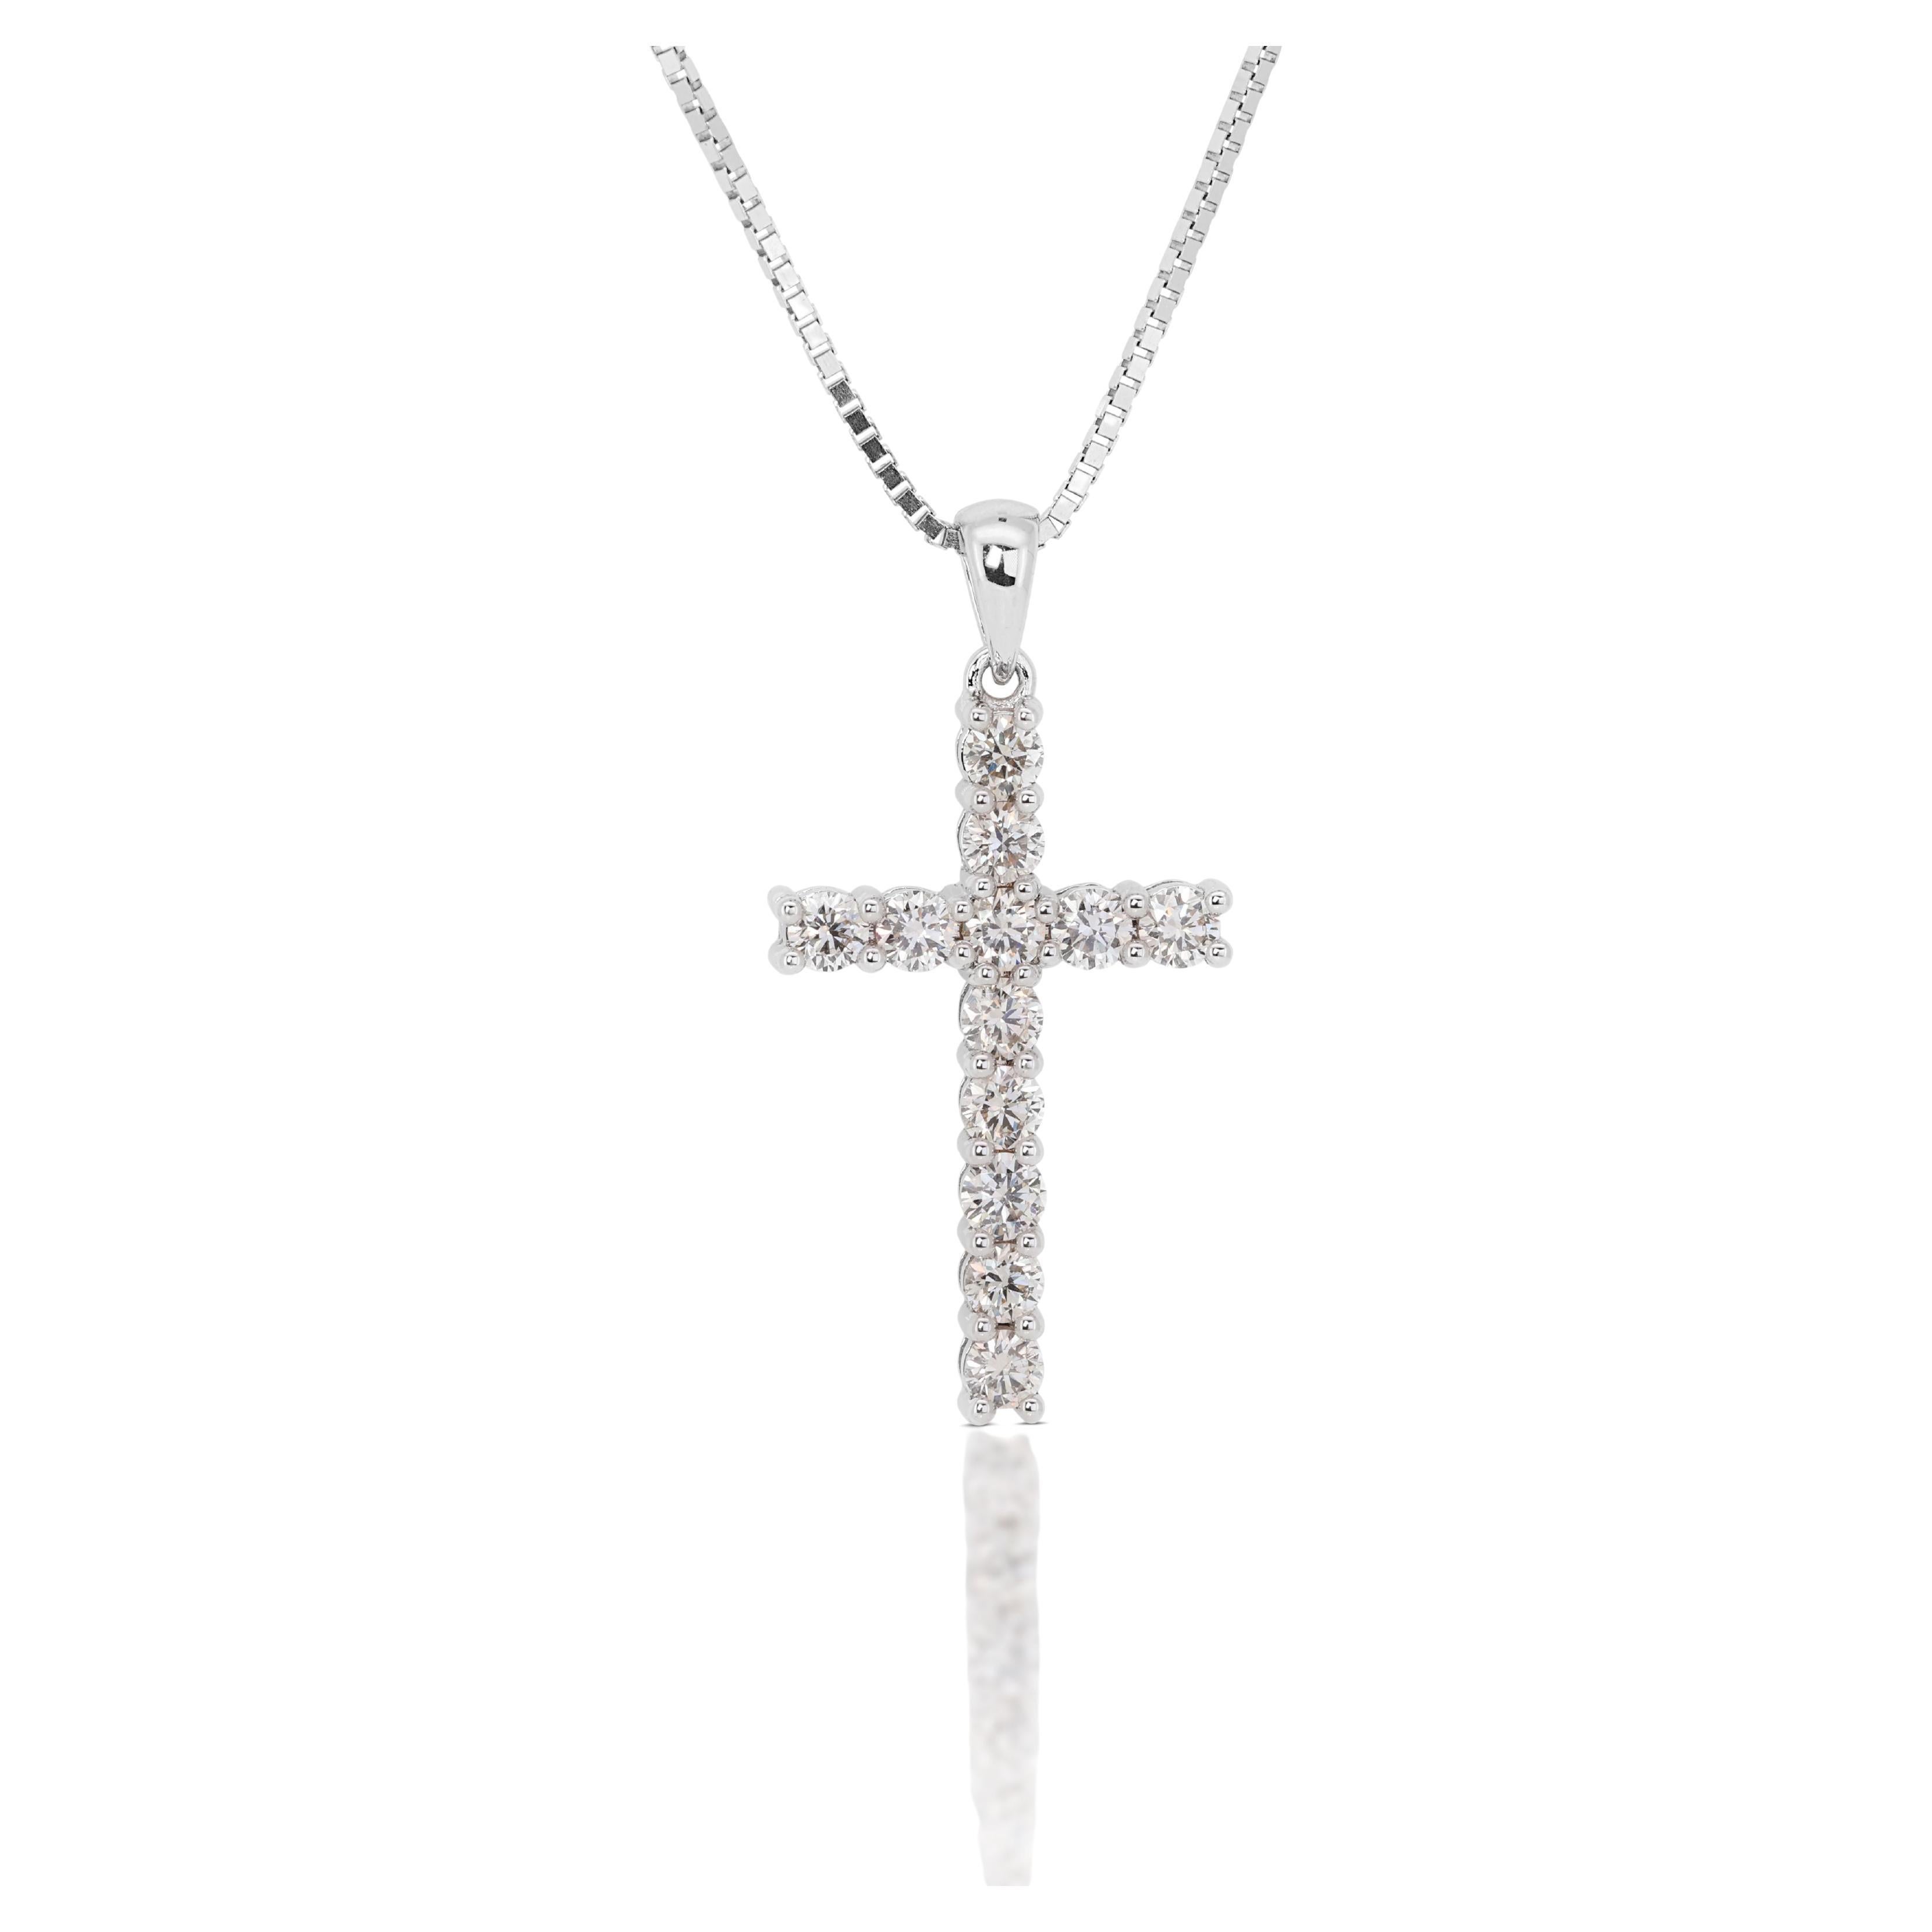 Exquisite 1.00ct Diamond Cross Pendant - (Chain not included)